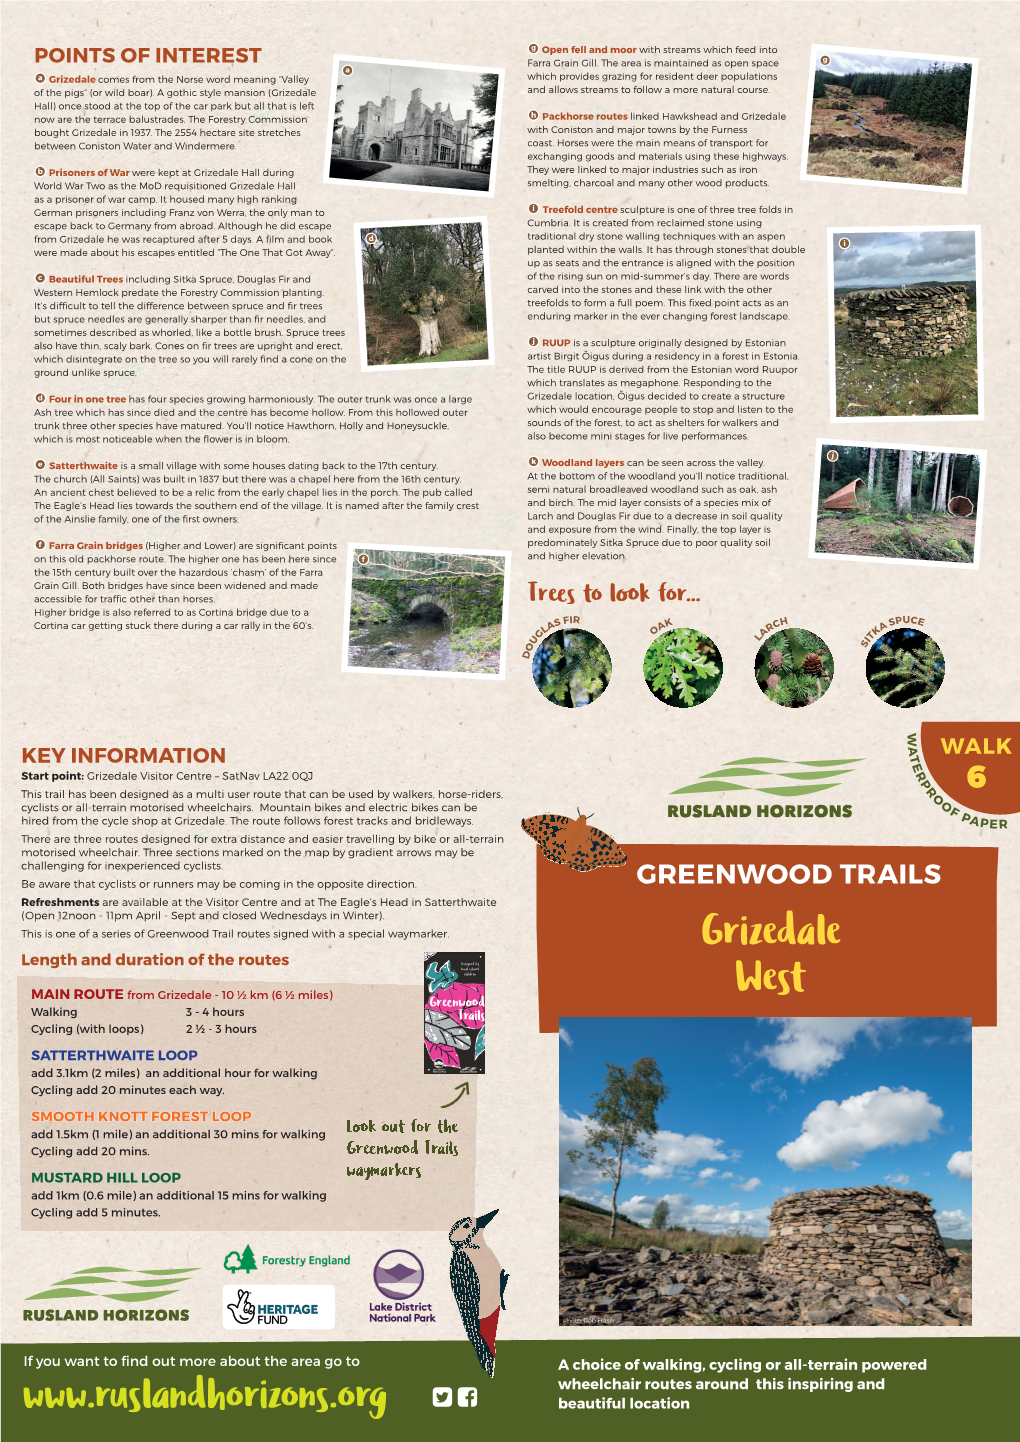 Greenwood Trail 6: Grizedale West(4